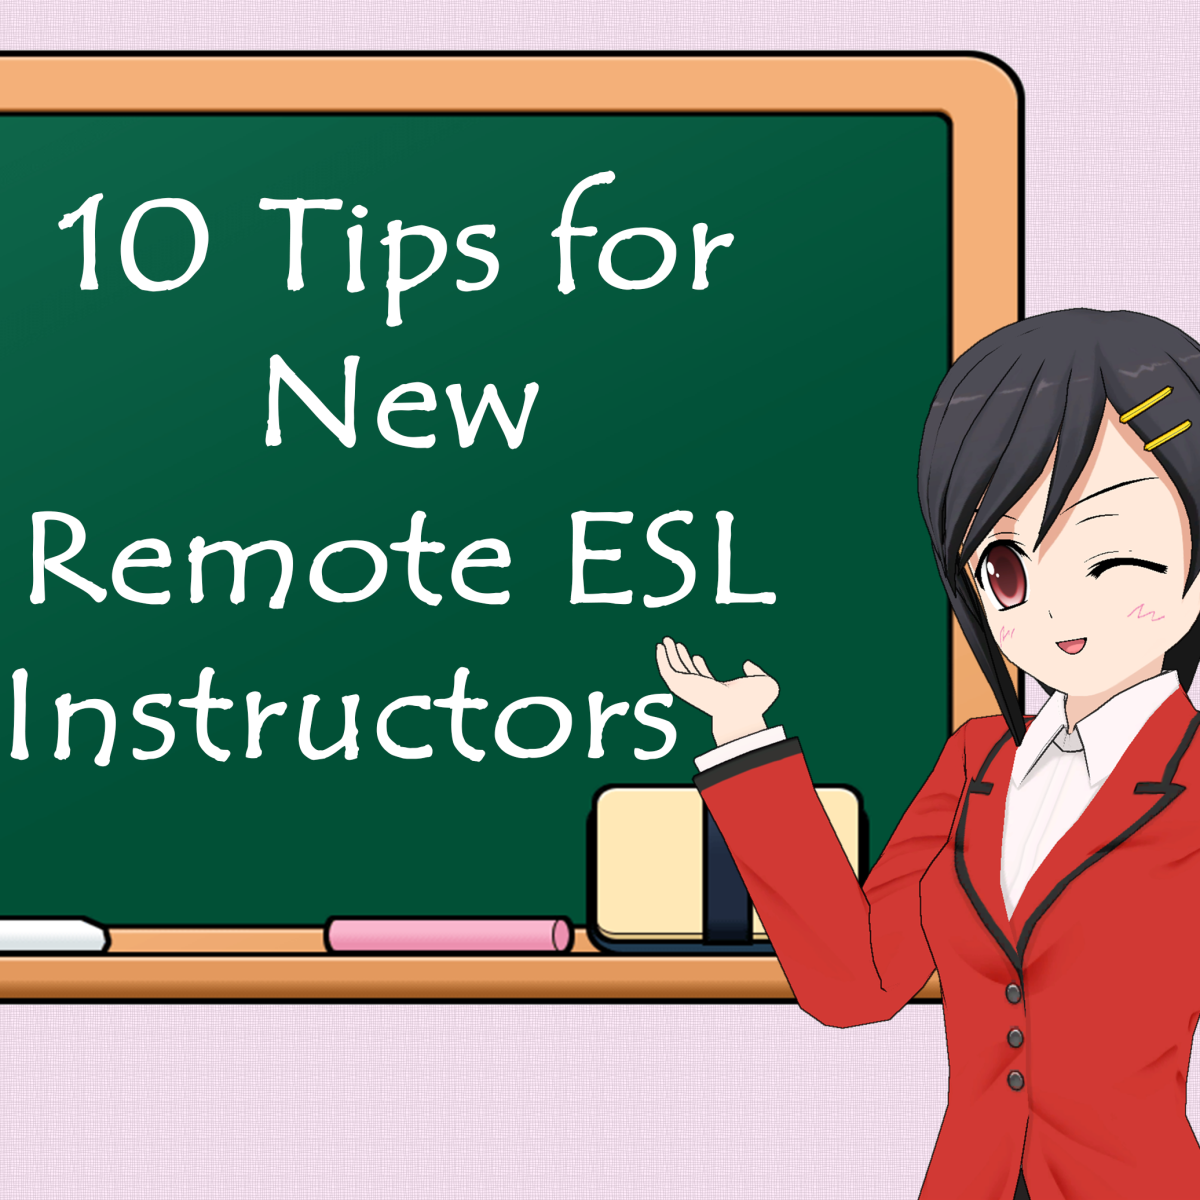 10 Tips for New Remote ESL Instructors